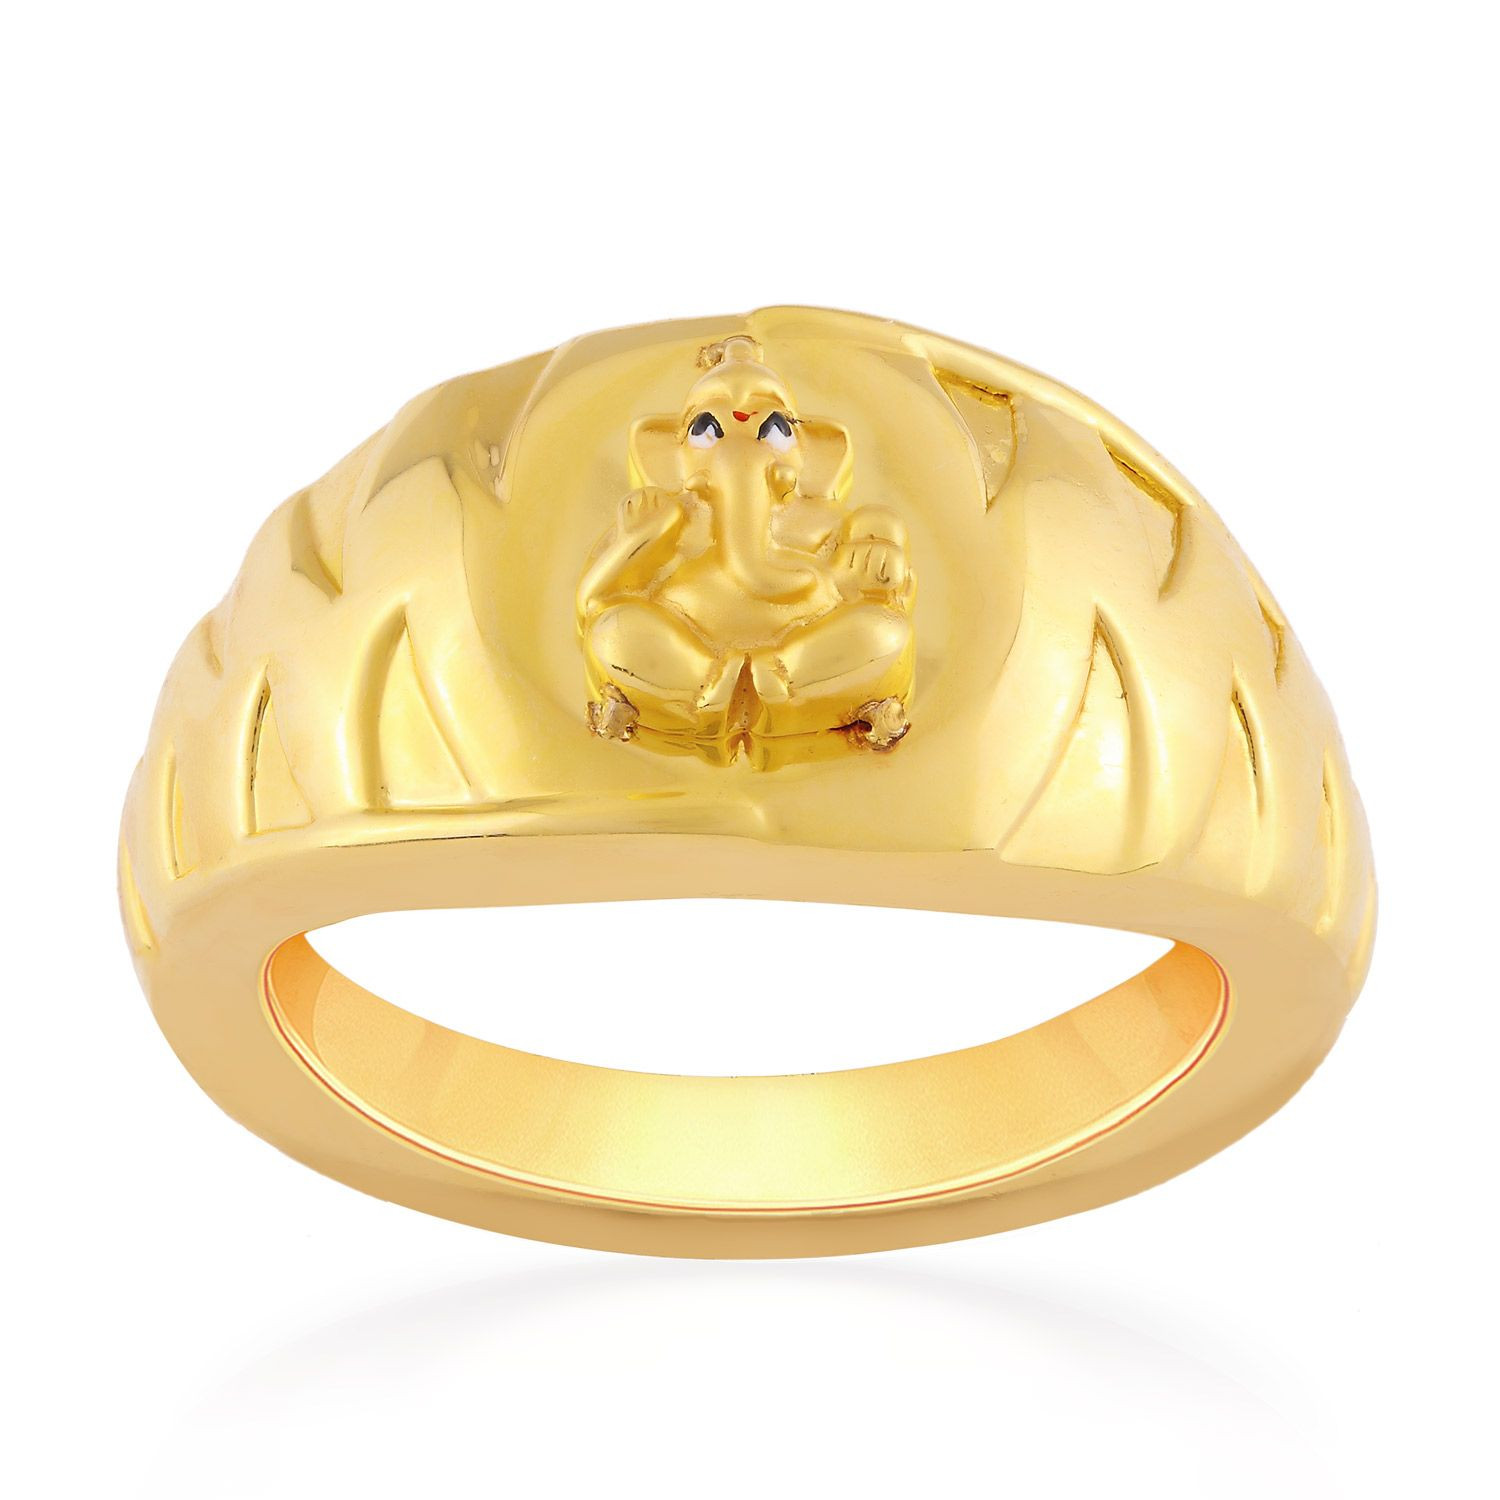 2 Gram Gold Ring Price Malabar Gold Store - www.puzzlewood.net 1696112942